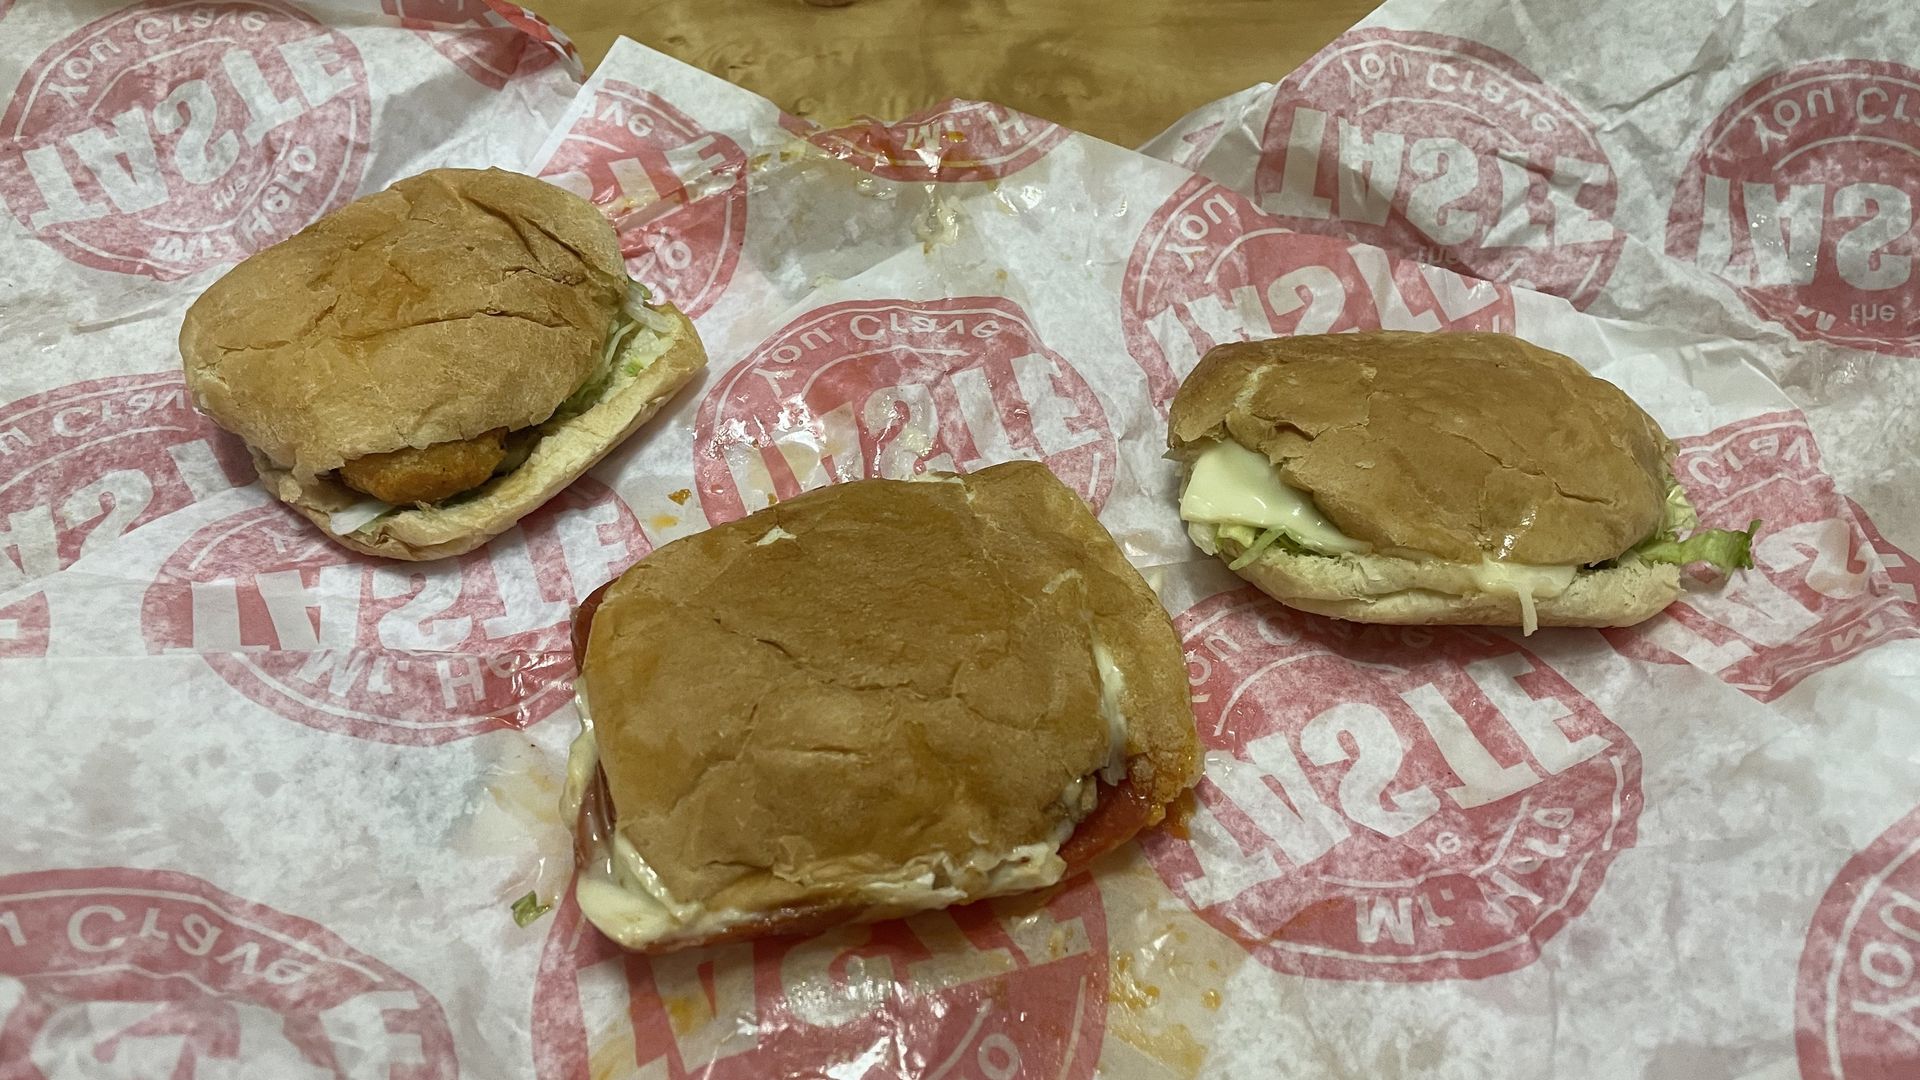 Three burgers in bad shape